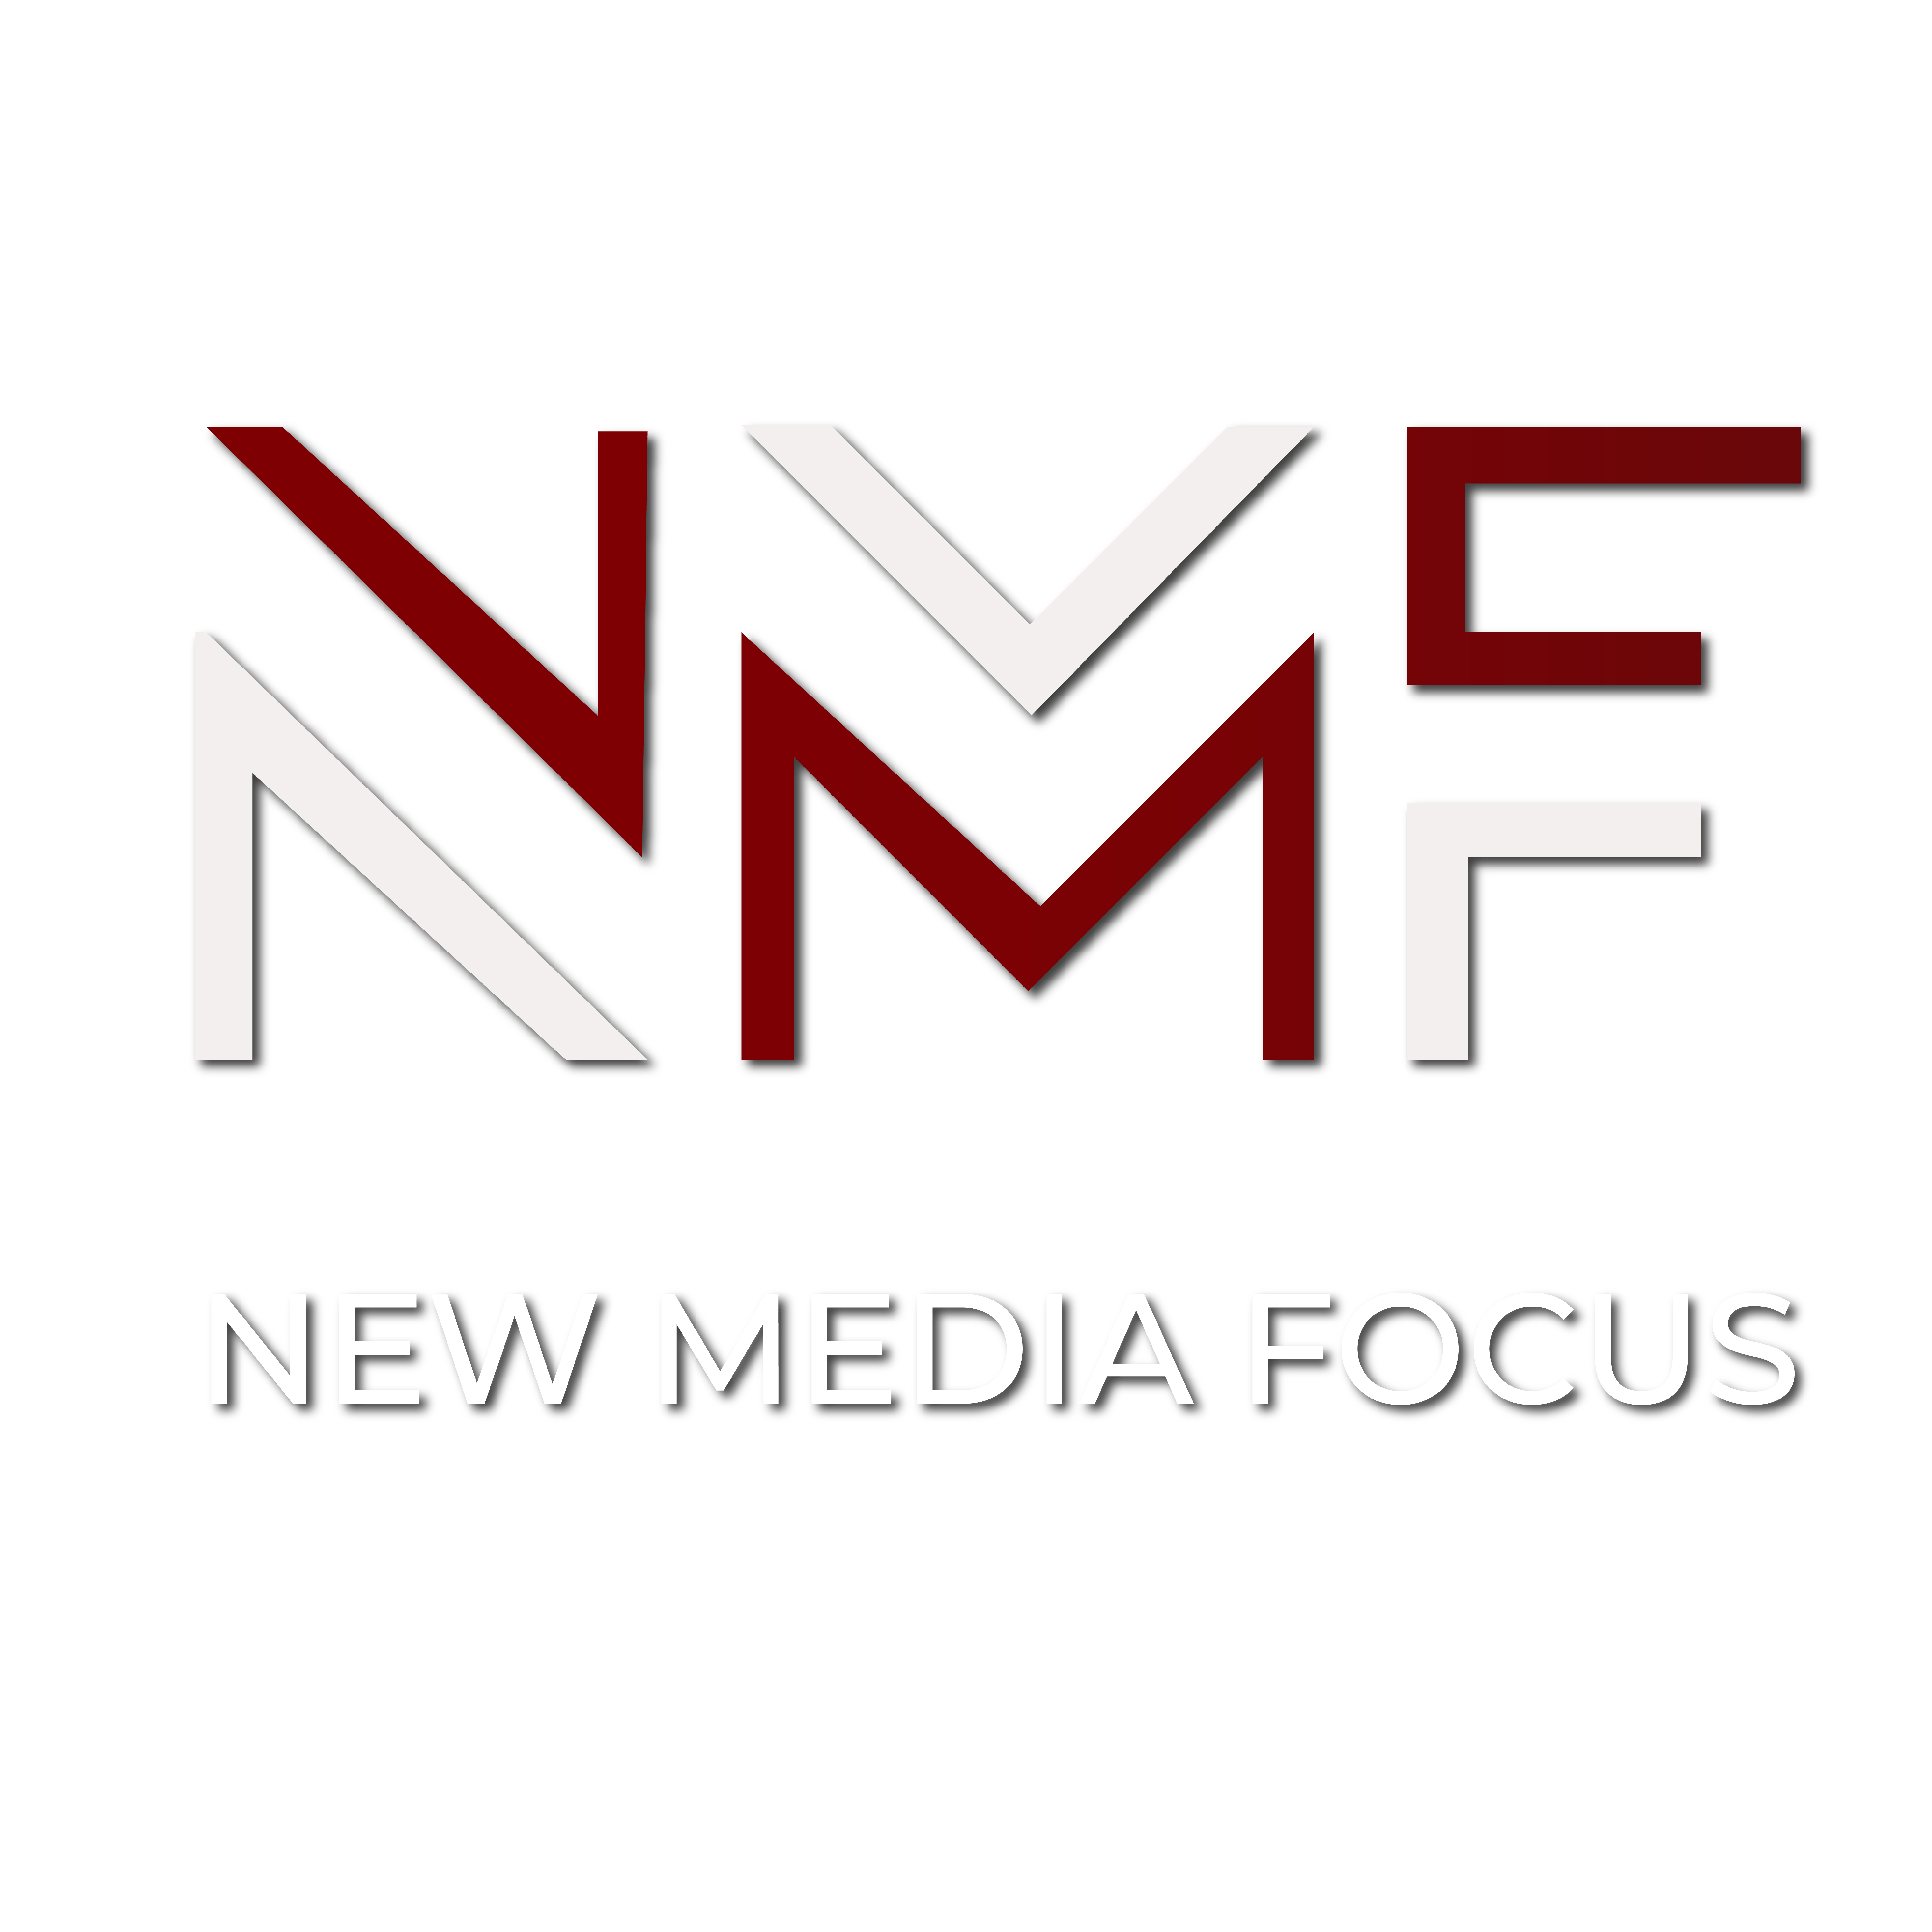 New media focus logo